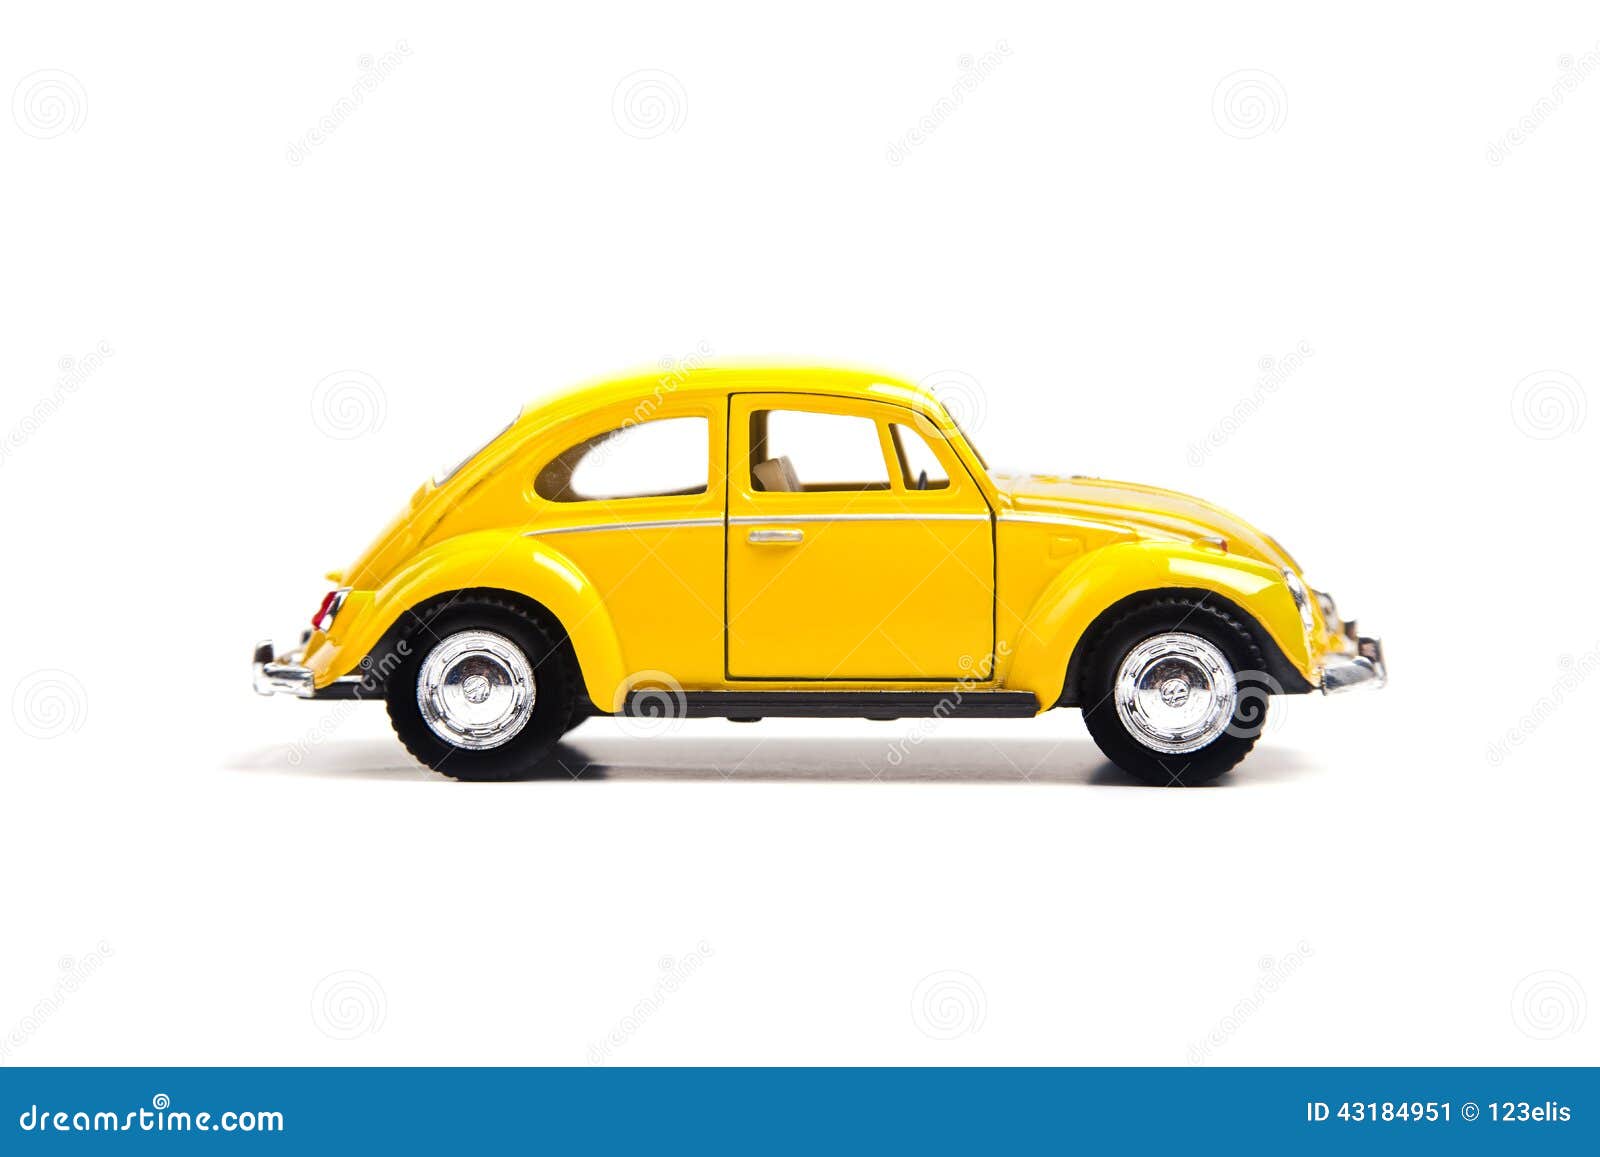 Volkswagen Beetle editorial photo. Image of germany, 2013 - 43184951